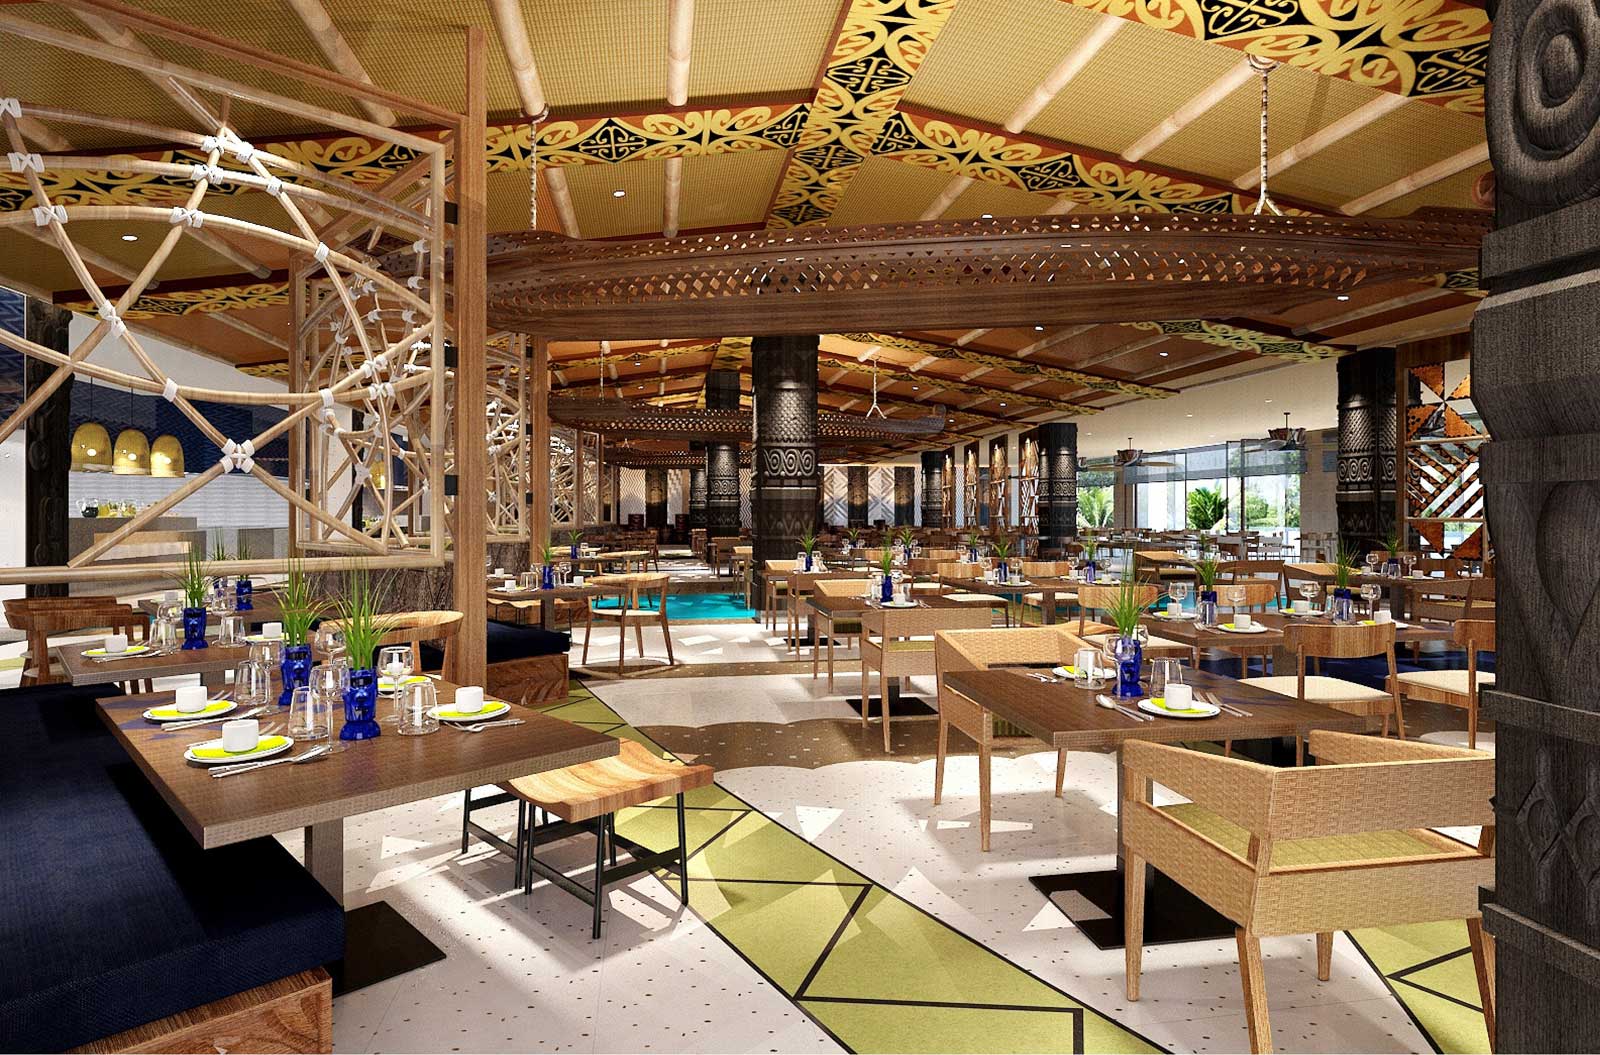 The dining area at Dubai's theme park hotel